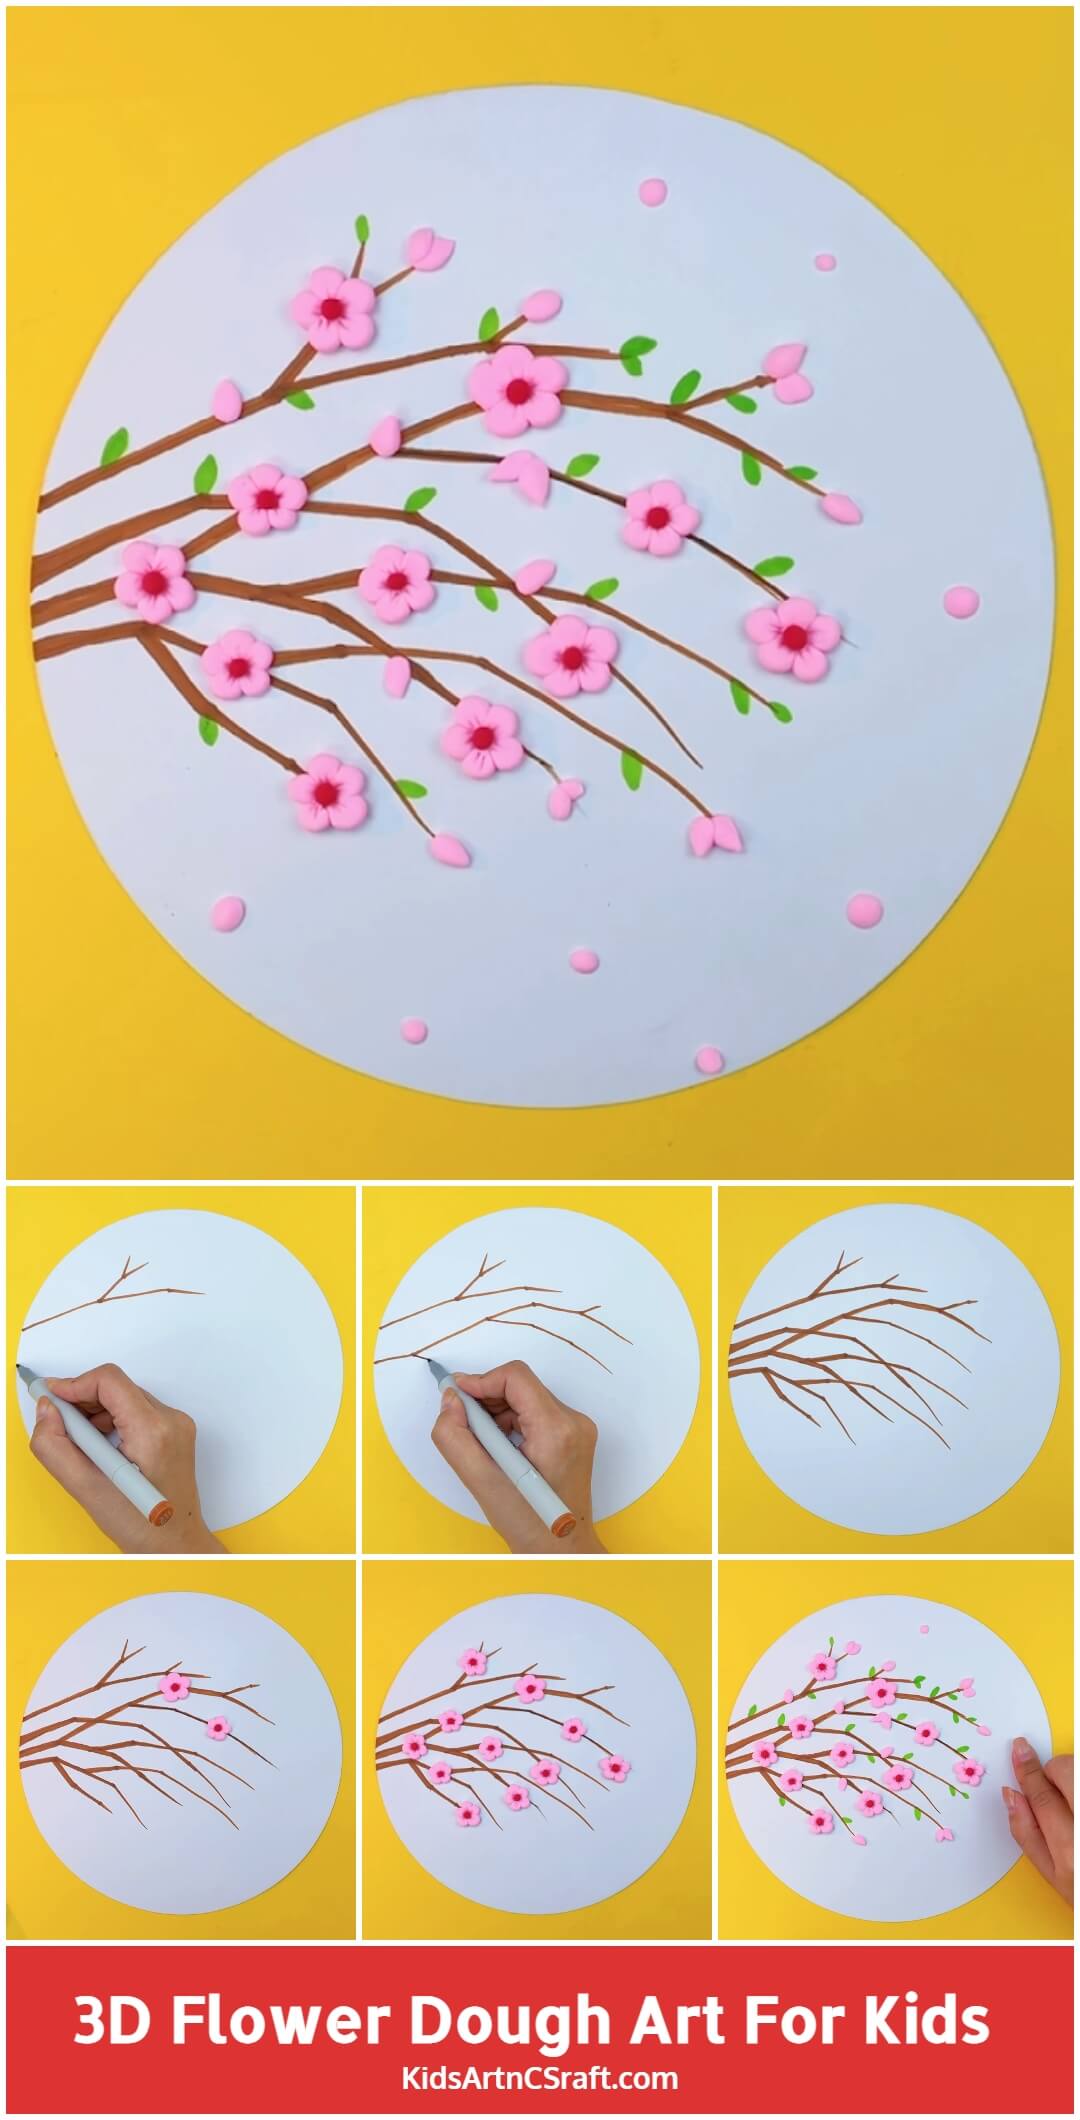 3D Flower Dough Art for Kids - Step by Step Tutorial